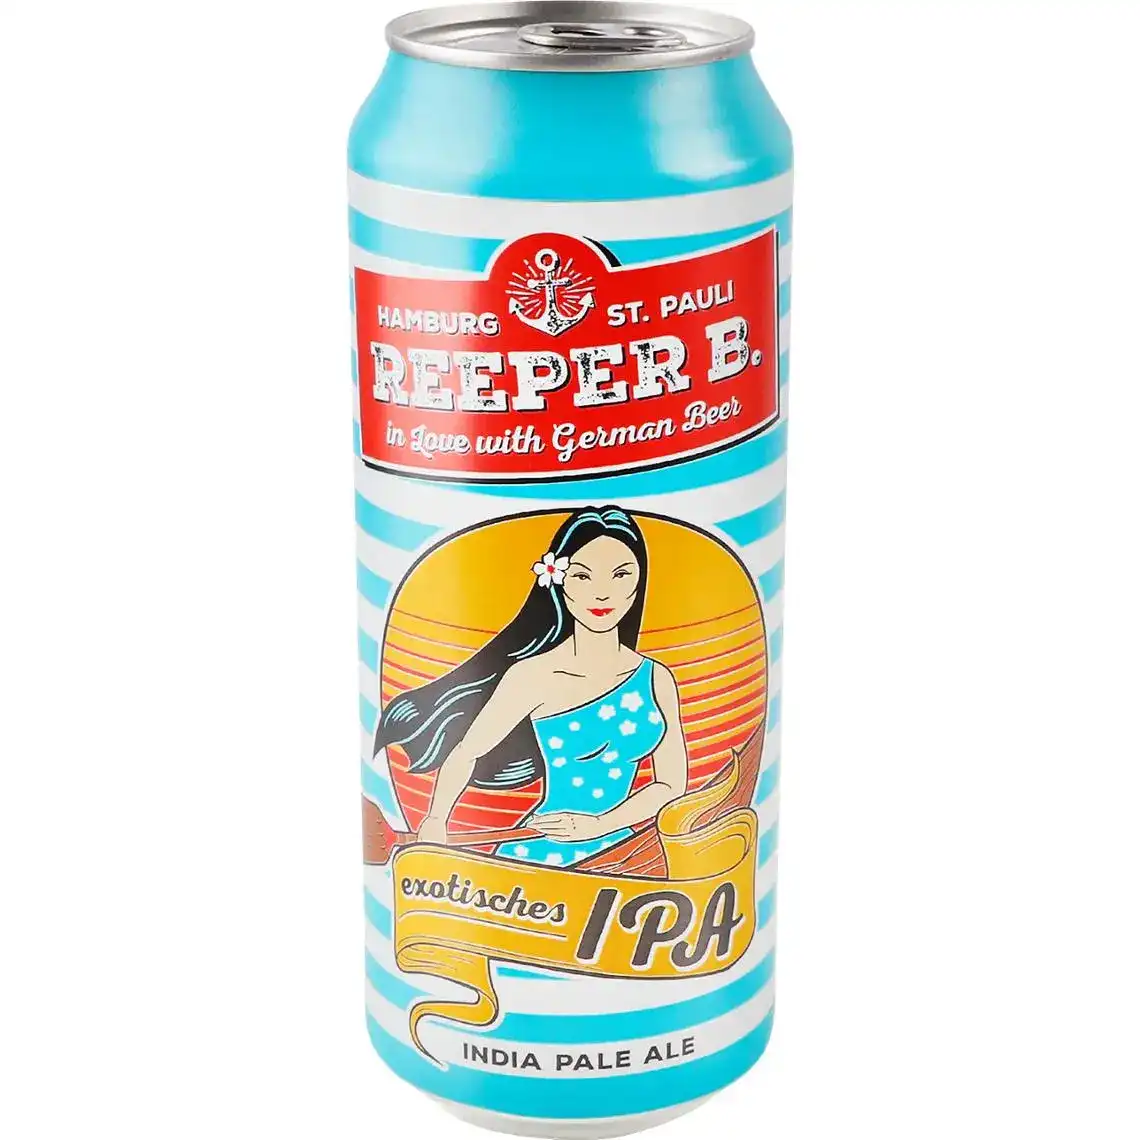 Пиво Reeper B Exotisches IPA светлое пастеризованное 5% 0.5 л купить ...